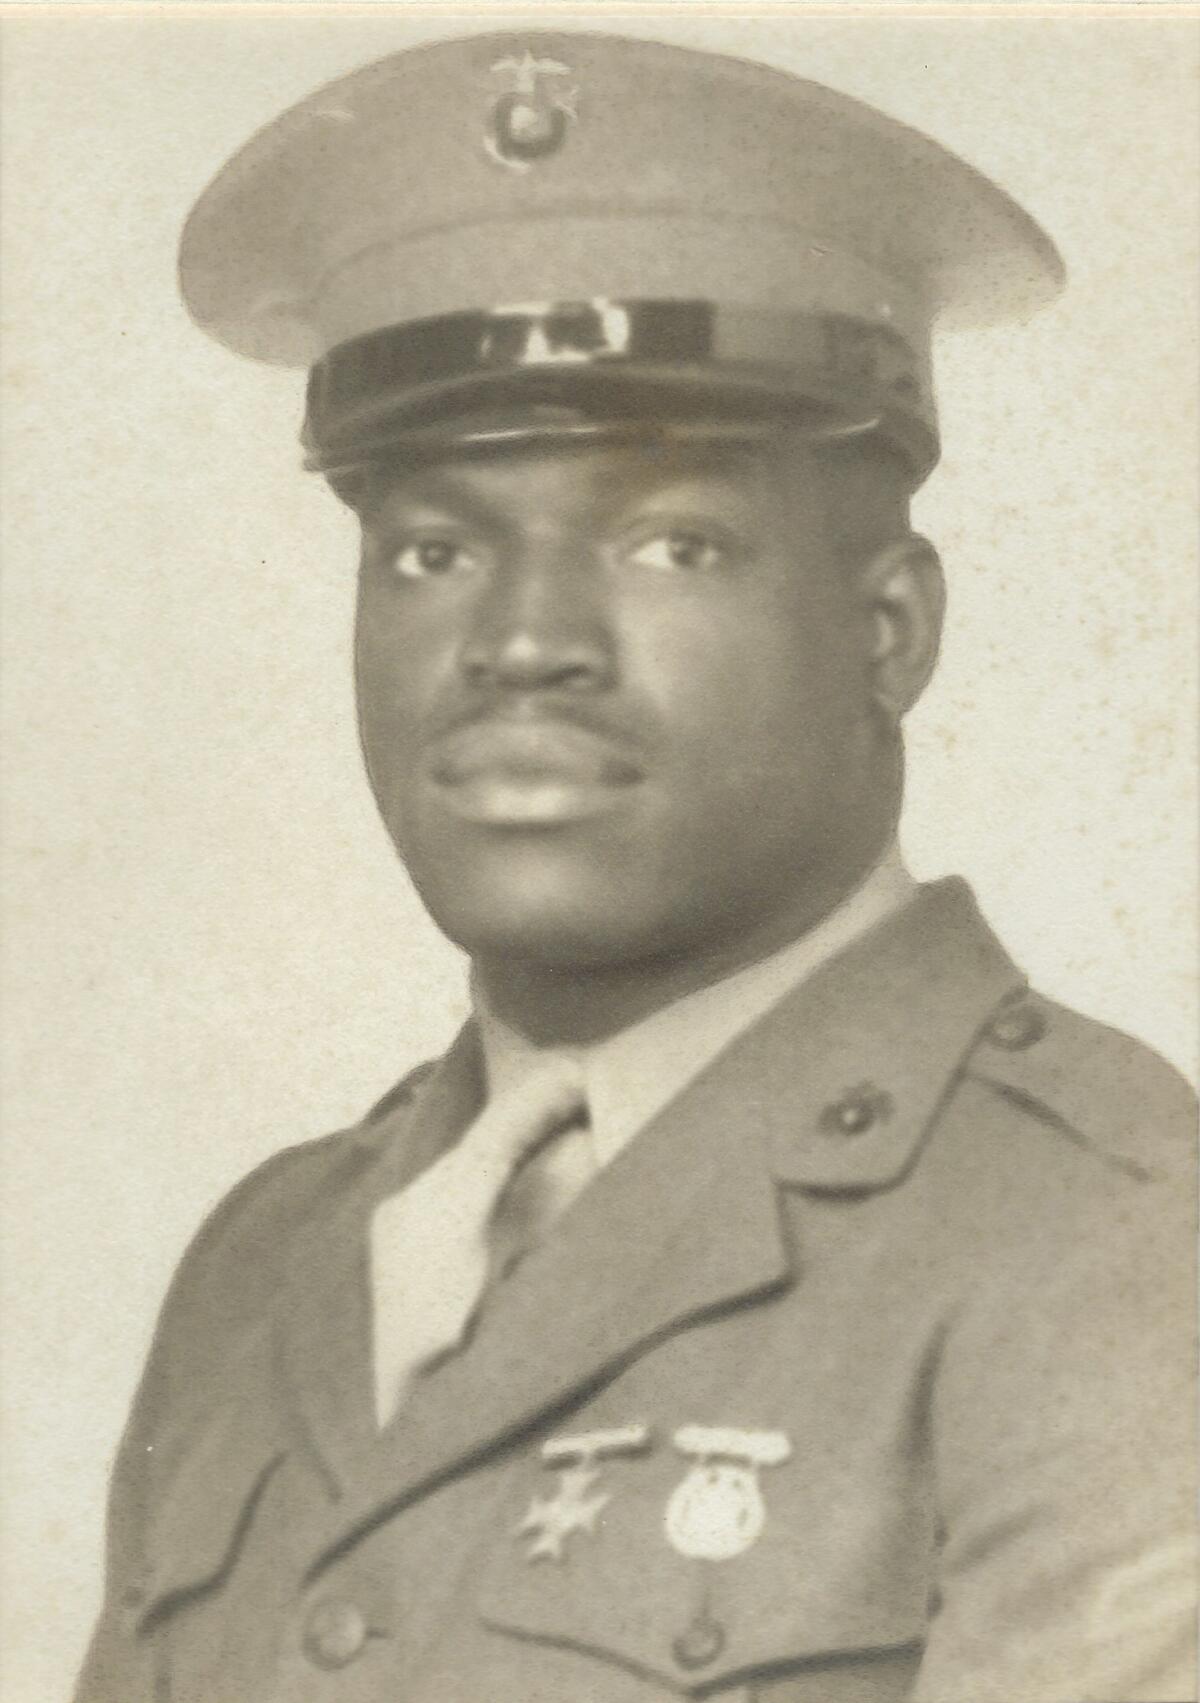 Sgt. Charles J. Shaw II in UCSM uniform circa 1950.